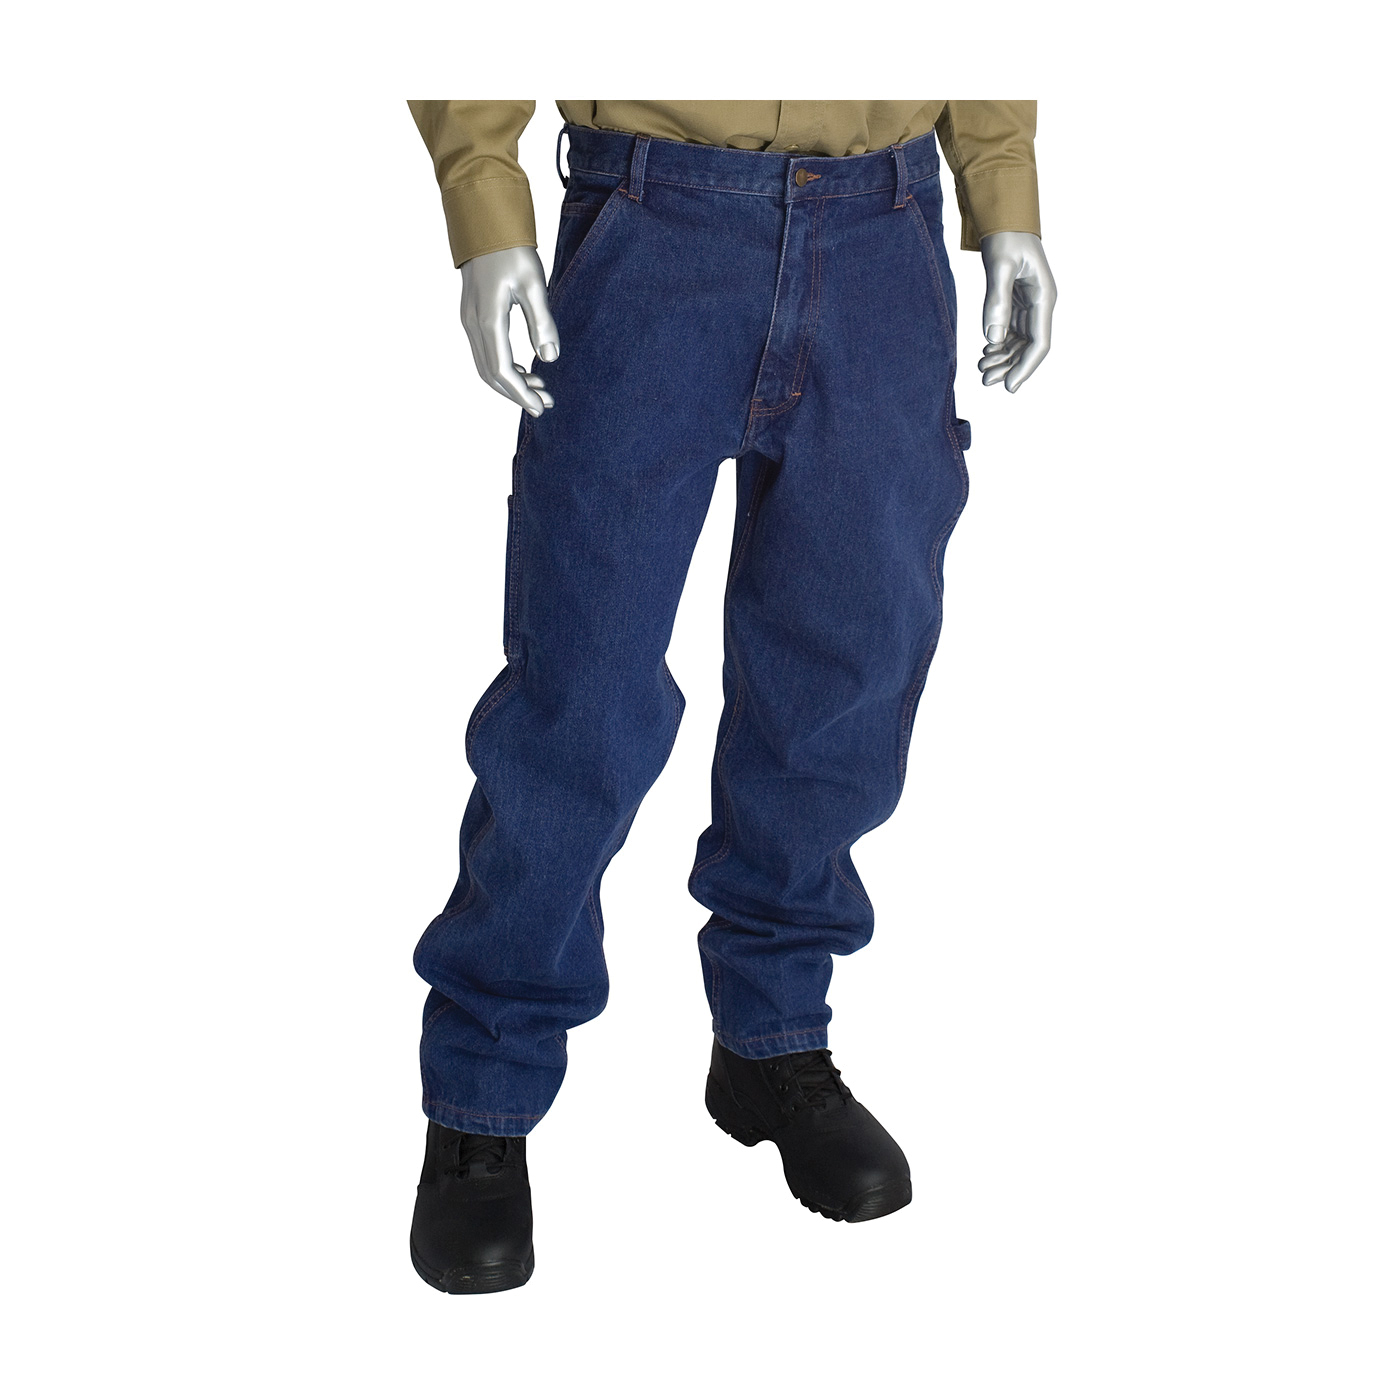 PIP® 385-FRCJ-4634 Carpenter Jeans, 46 in Waist, 34 in L Inseam, Blue Denim, Cotton